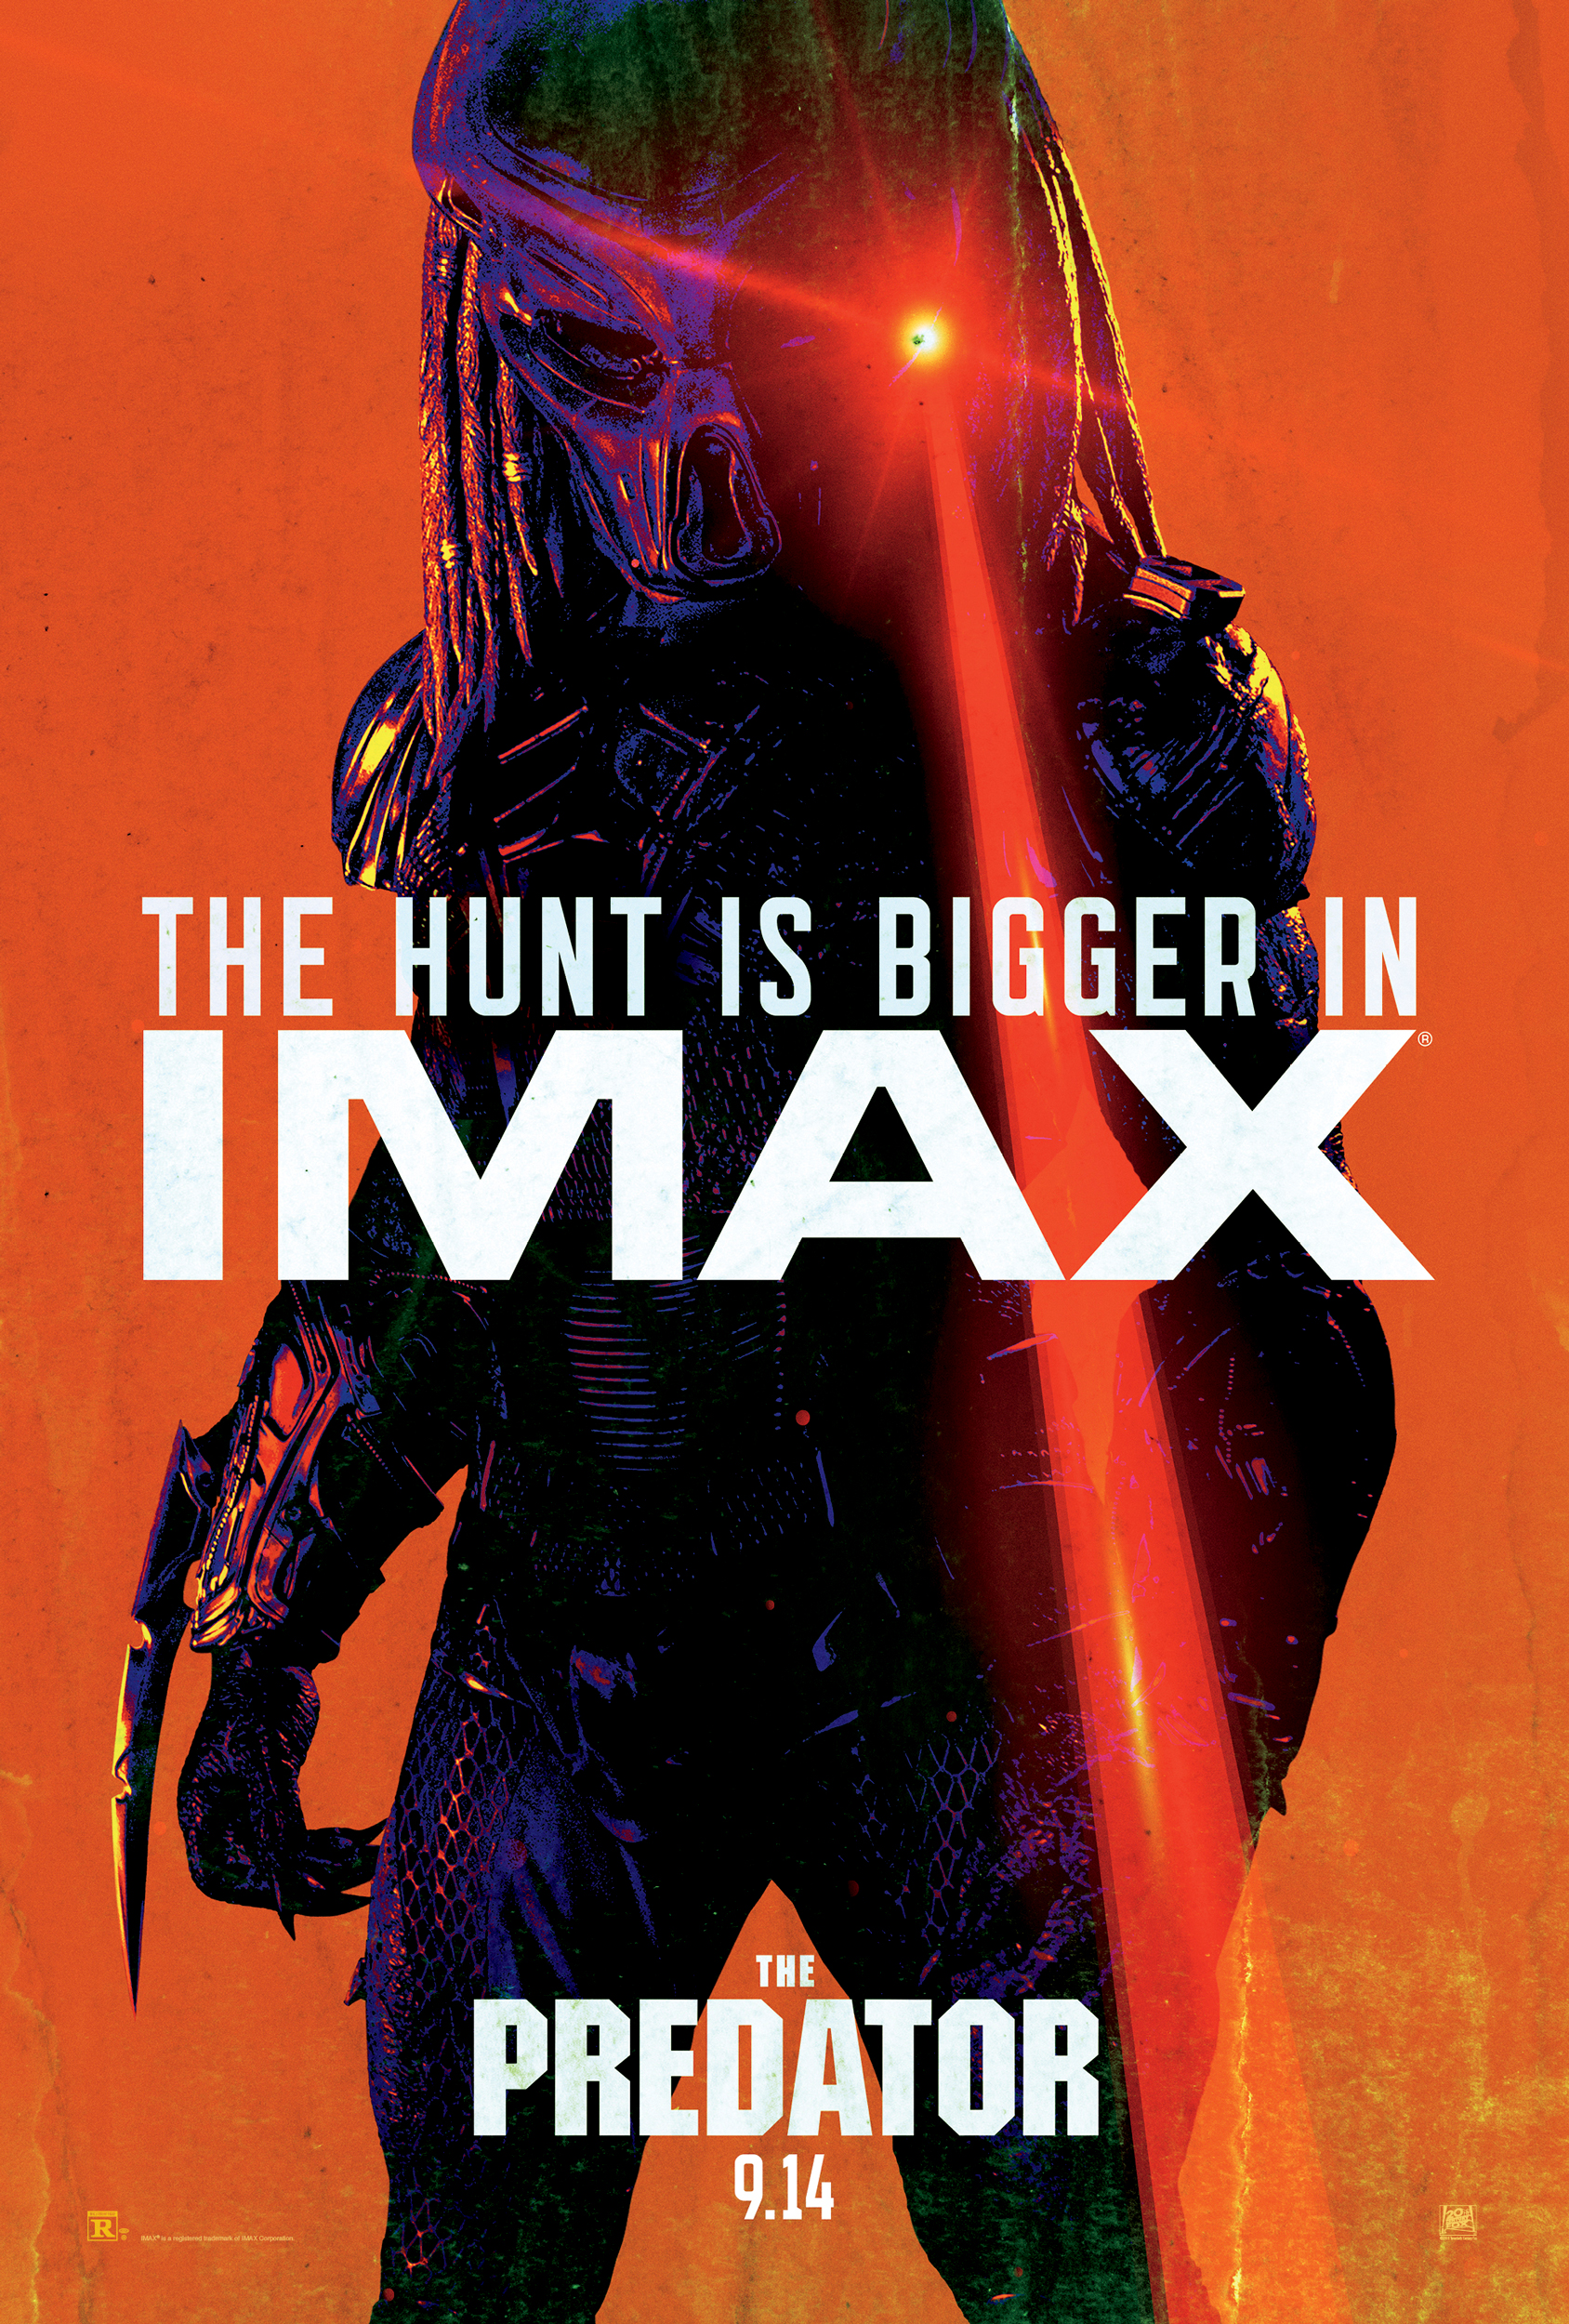 Predator IMAX poster